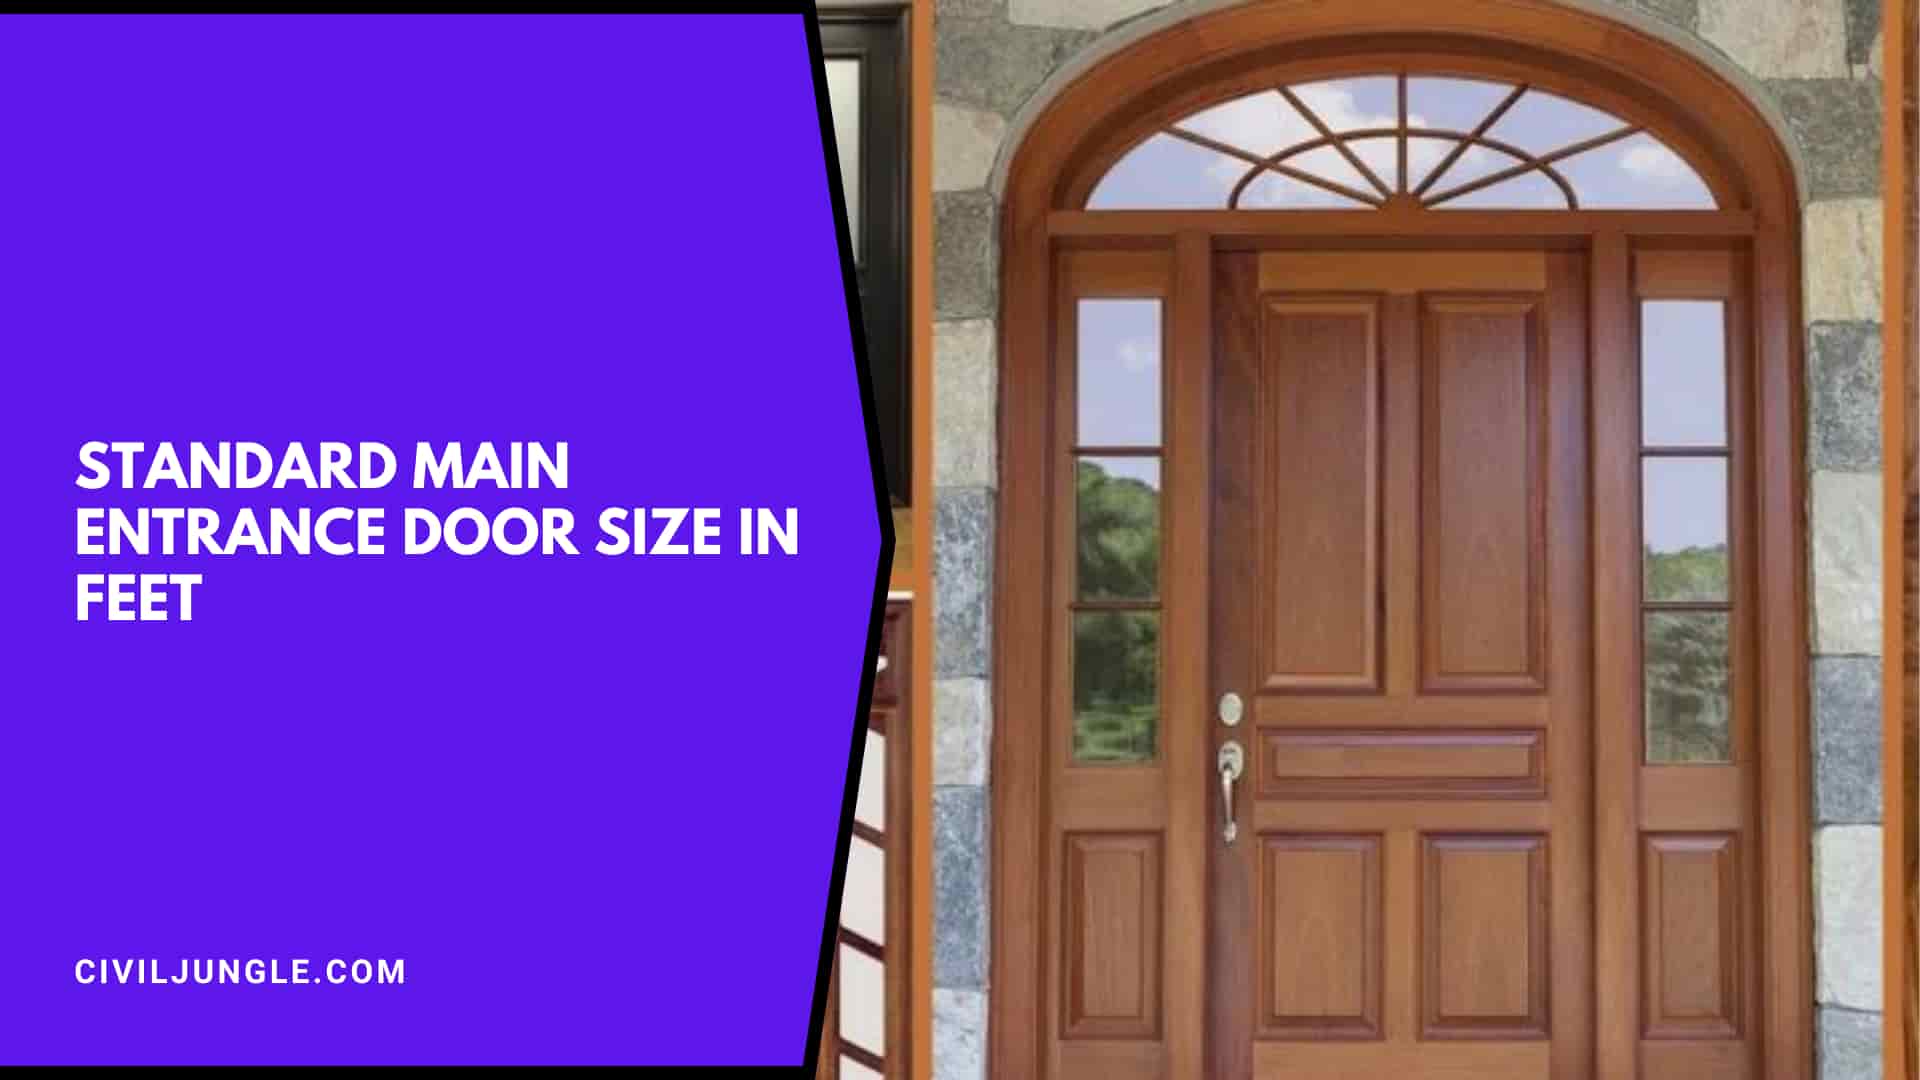 Standard Main Entrance Door Size in Feet